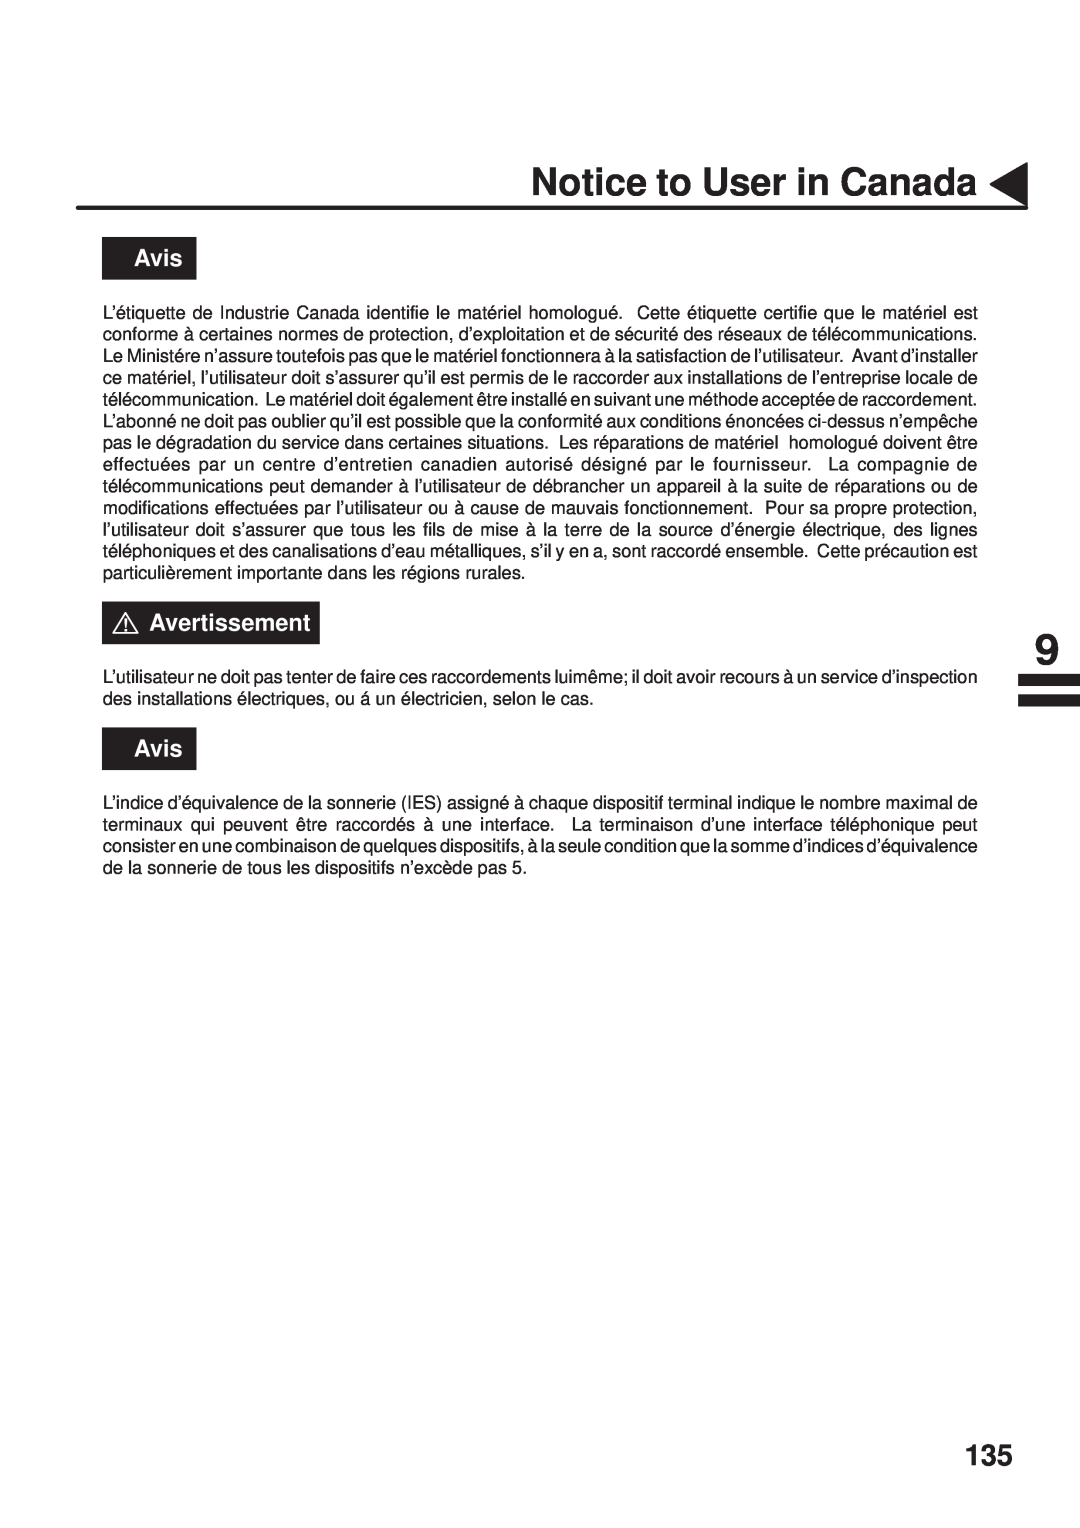 Panasonic UF-333 manual Notice to User in Canada, Avis, Avertissement 